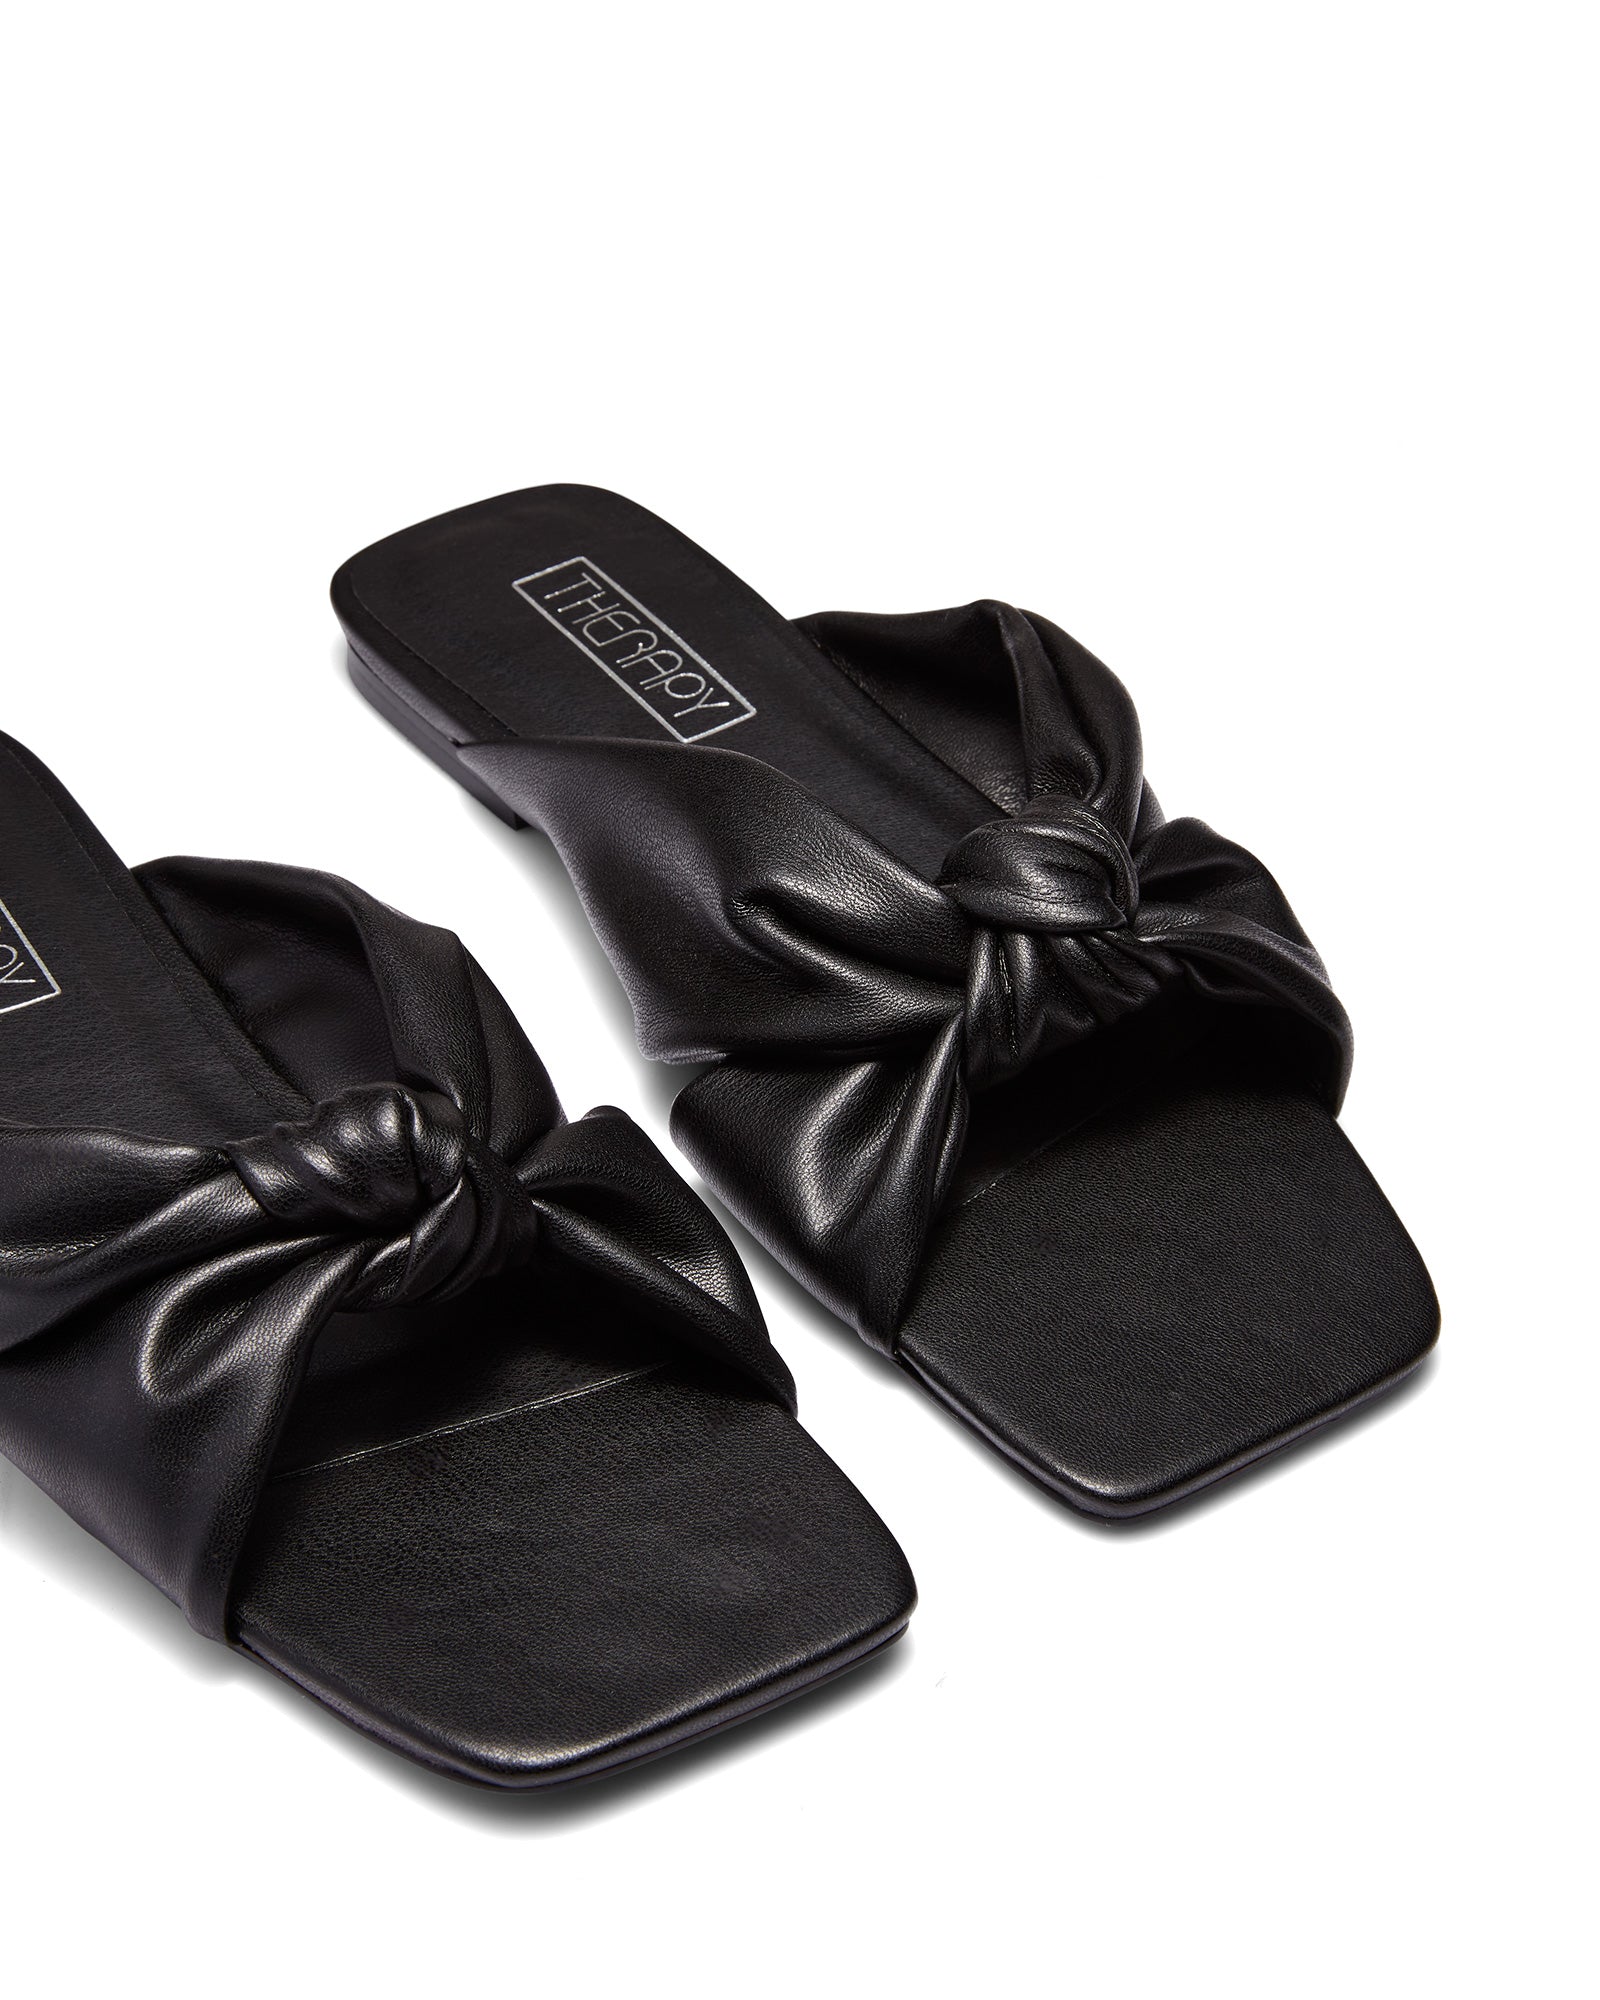 Therapy Shoes Sofia Black | Women's Flats | Slides | Sandals | Knot